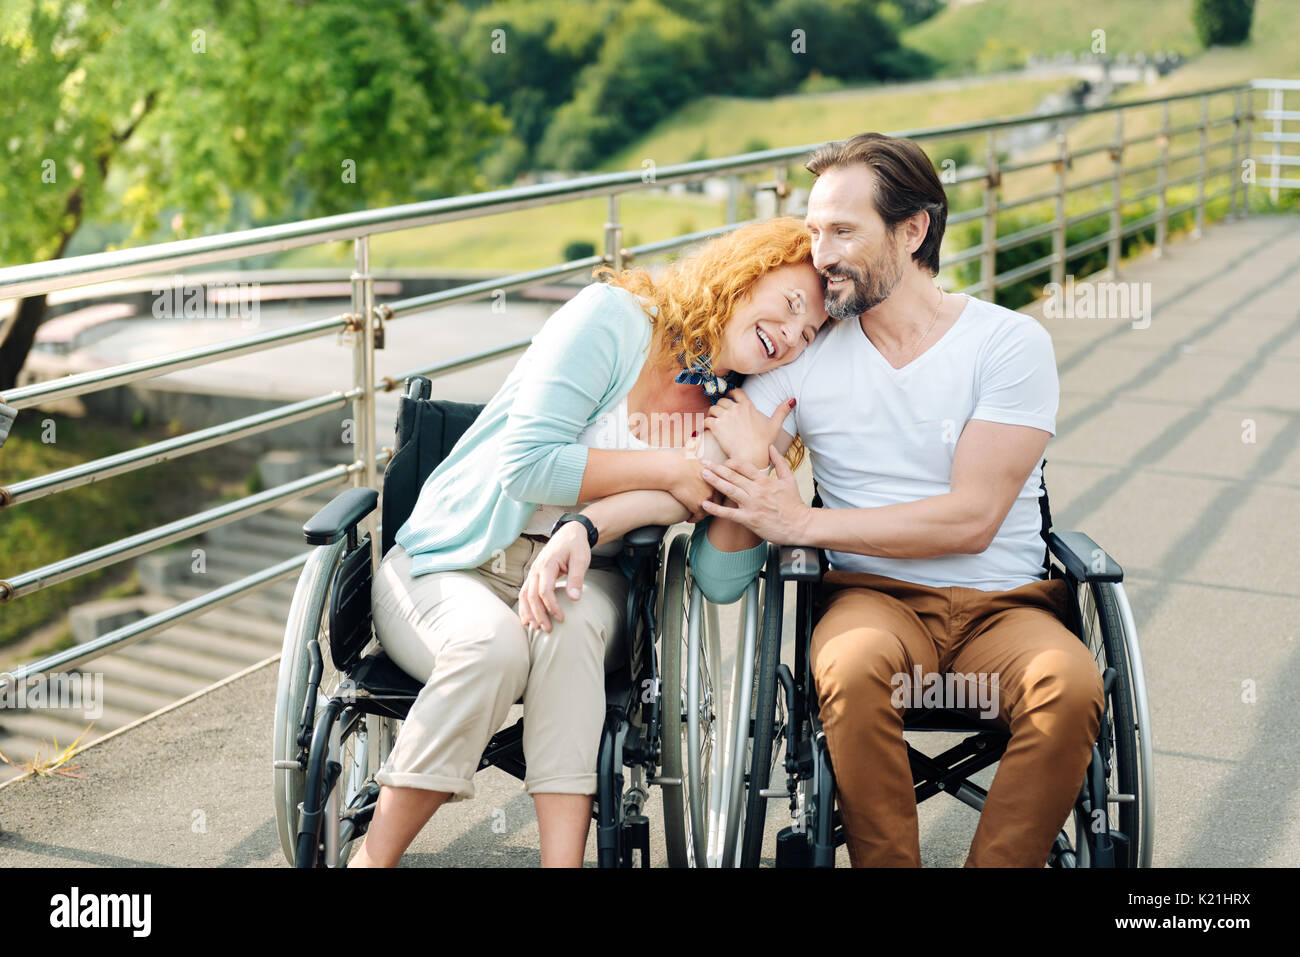 Cheerful senior woman embracing her loving wheelchaired husband Stock Photo